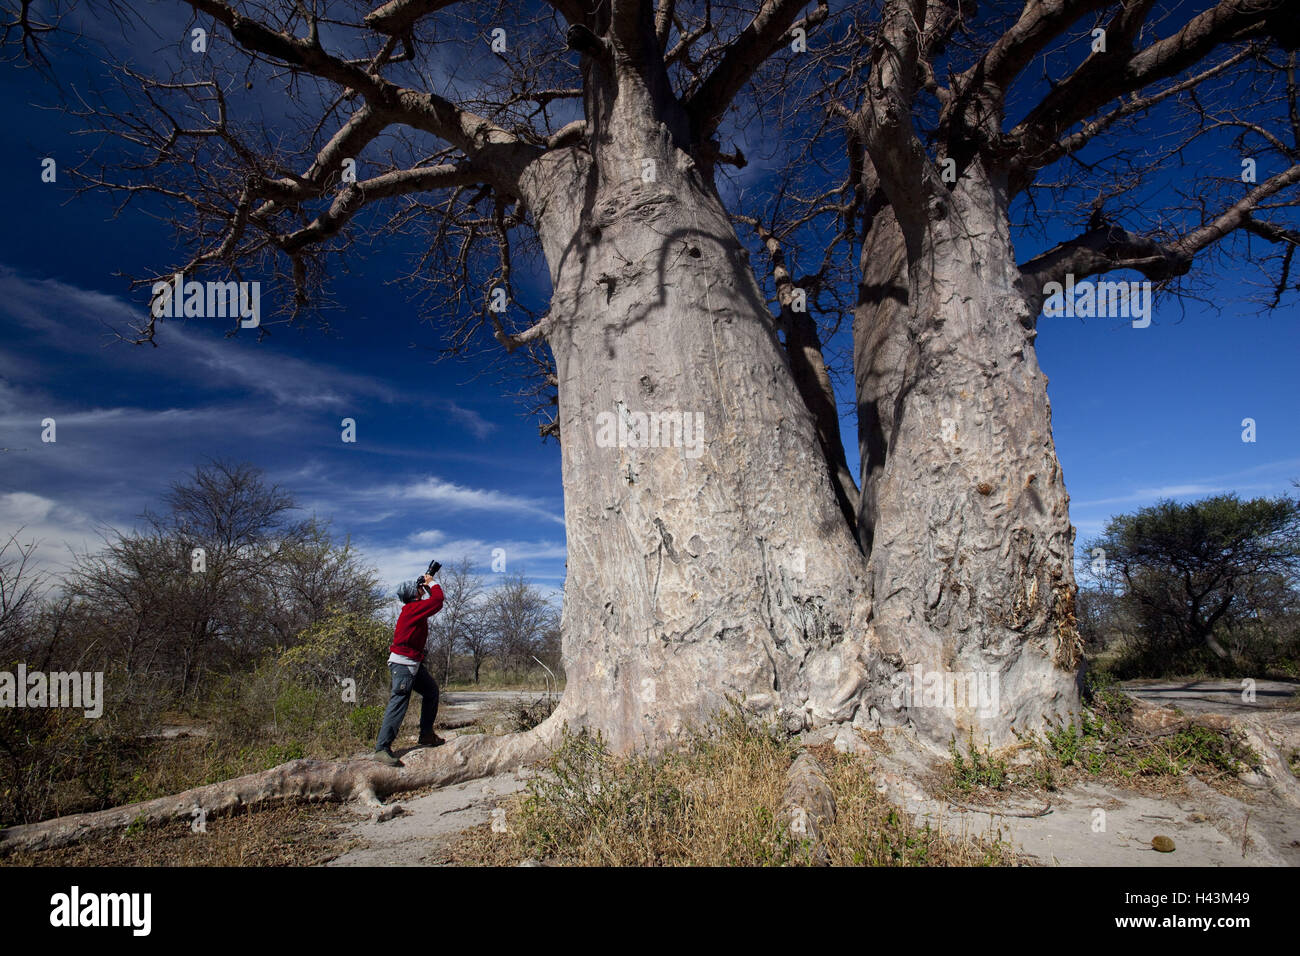 Africa, Botswana, North west District, Nxai-Pan national park, Baines-Baobabs, Adansonia digitata, photographer, Stock Photo